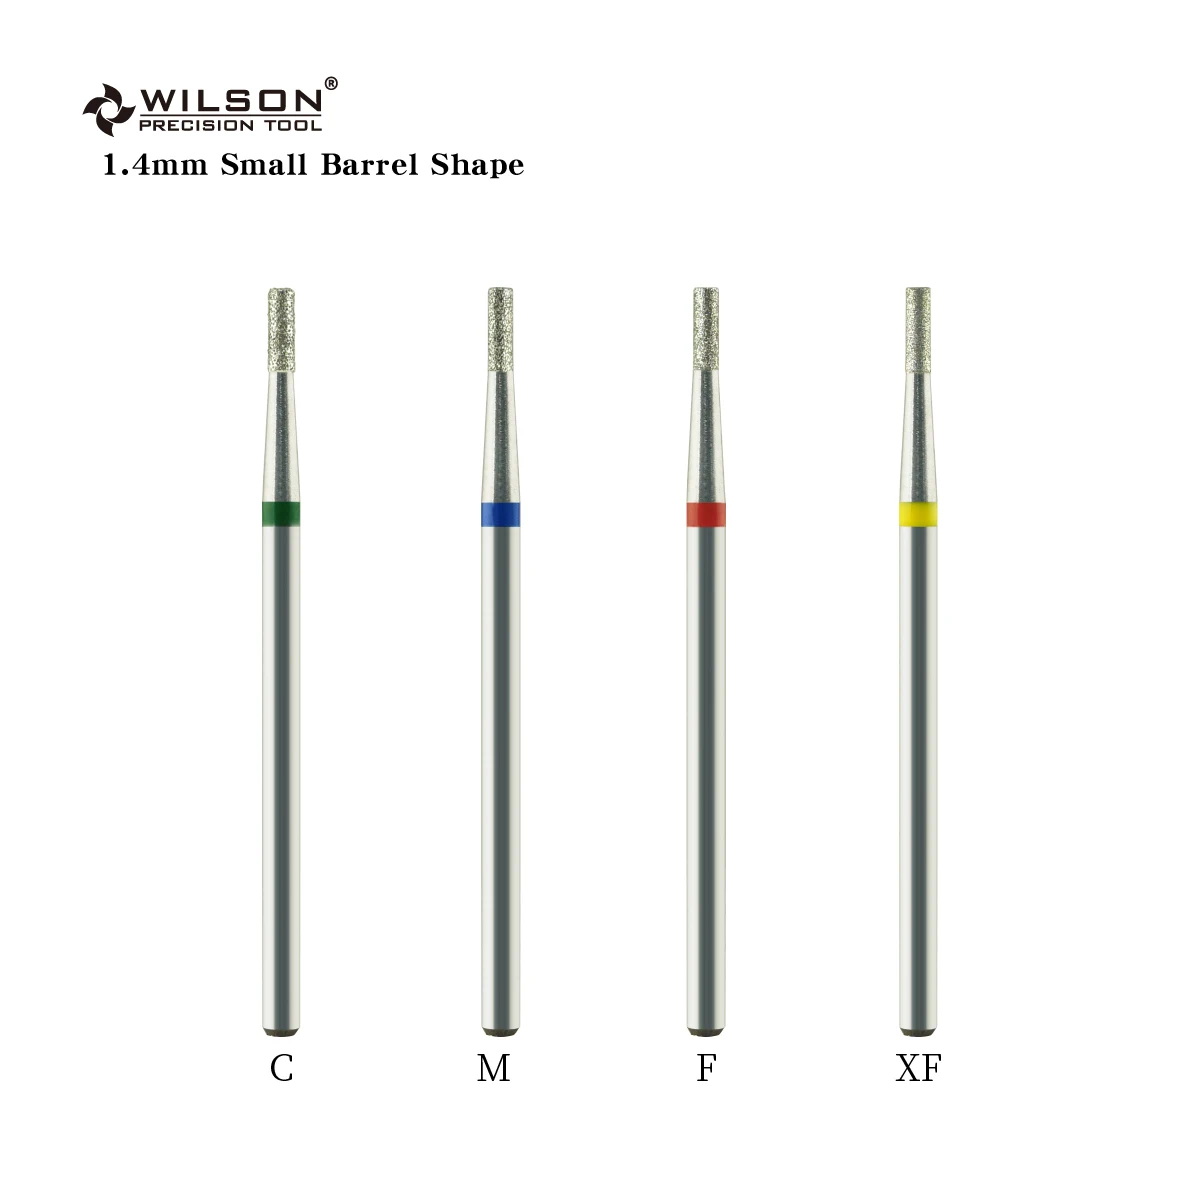 

1.4mm Short Barrel Shape Diamond Bits nail drill bits WILSON PRECISION TOOL